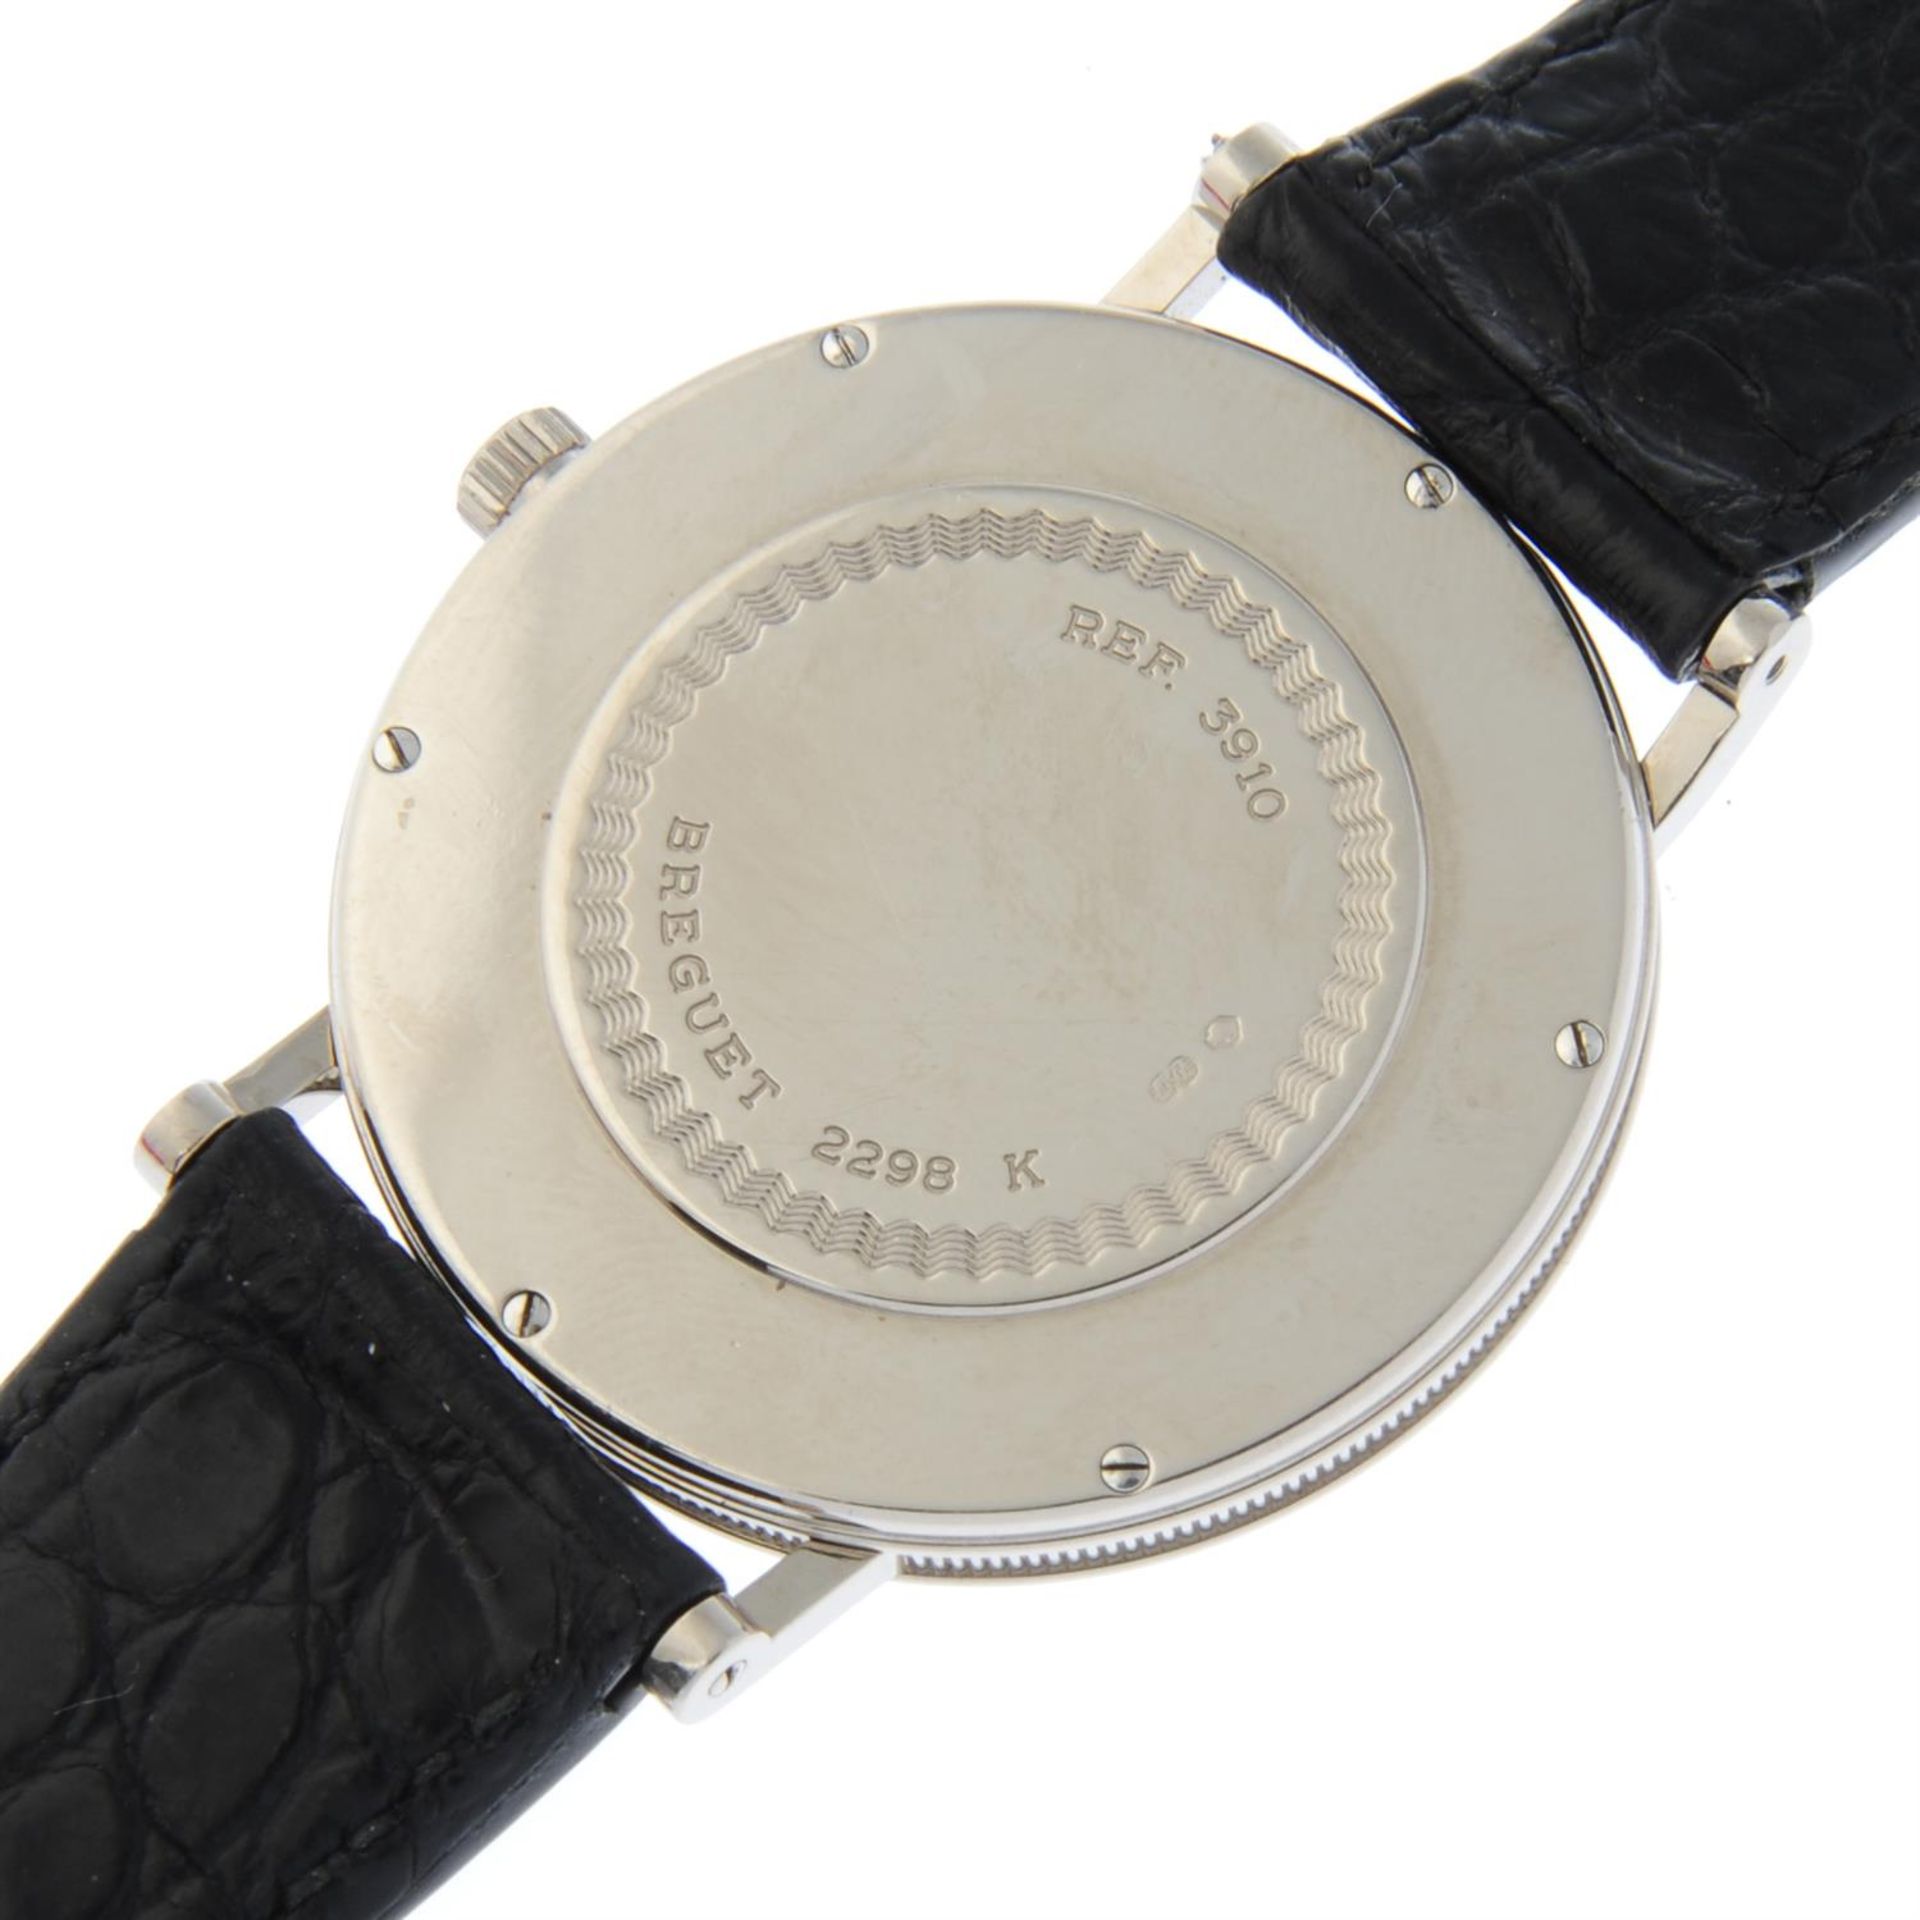 BREGUET - an 18ct white gold Classique 3910 wrist watch, 34mm. - Image 4 of 5